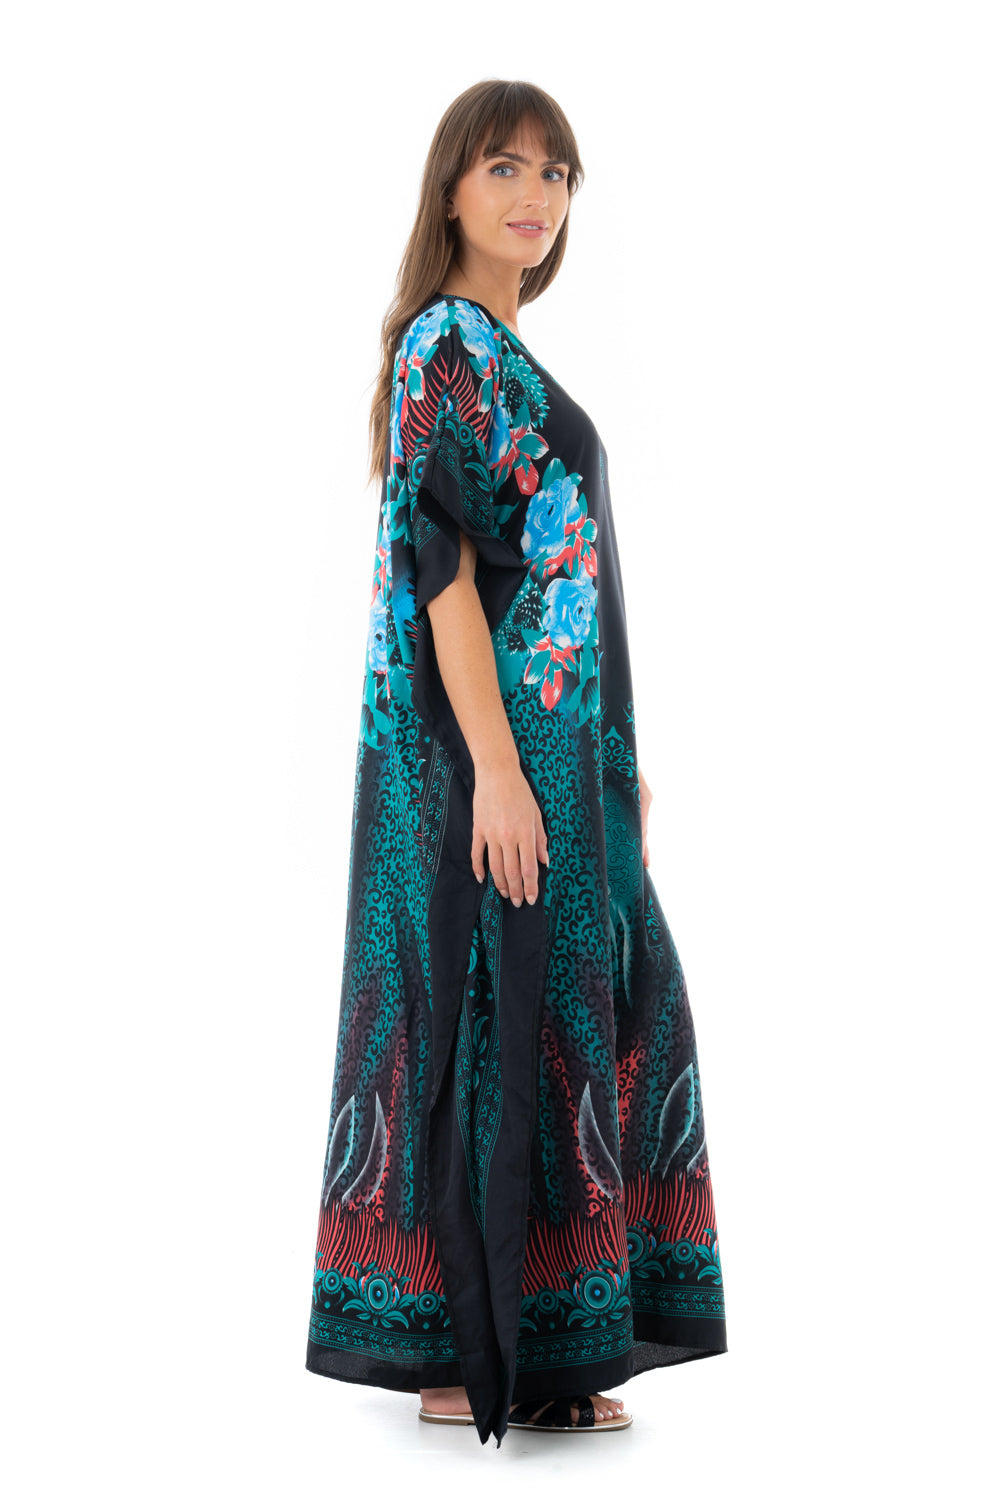 Ladies Floral Full Length Maxi Kaftan Dress in Teal